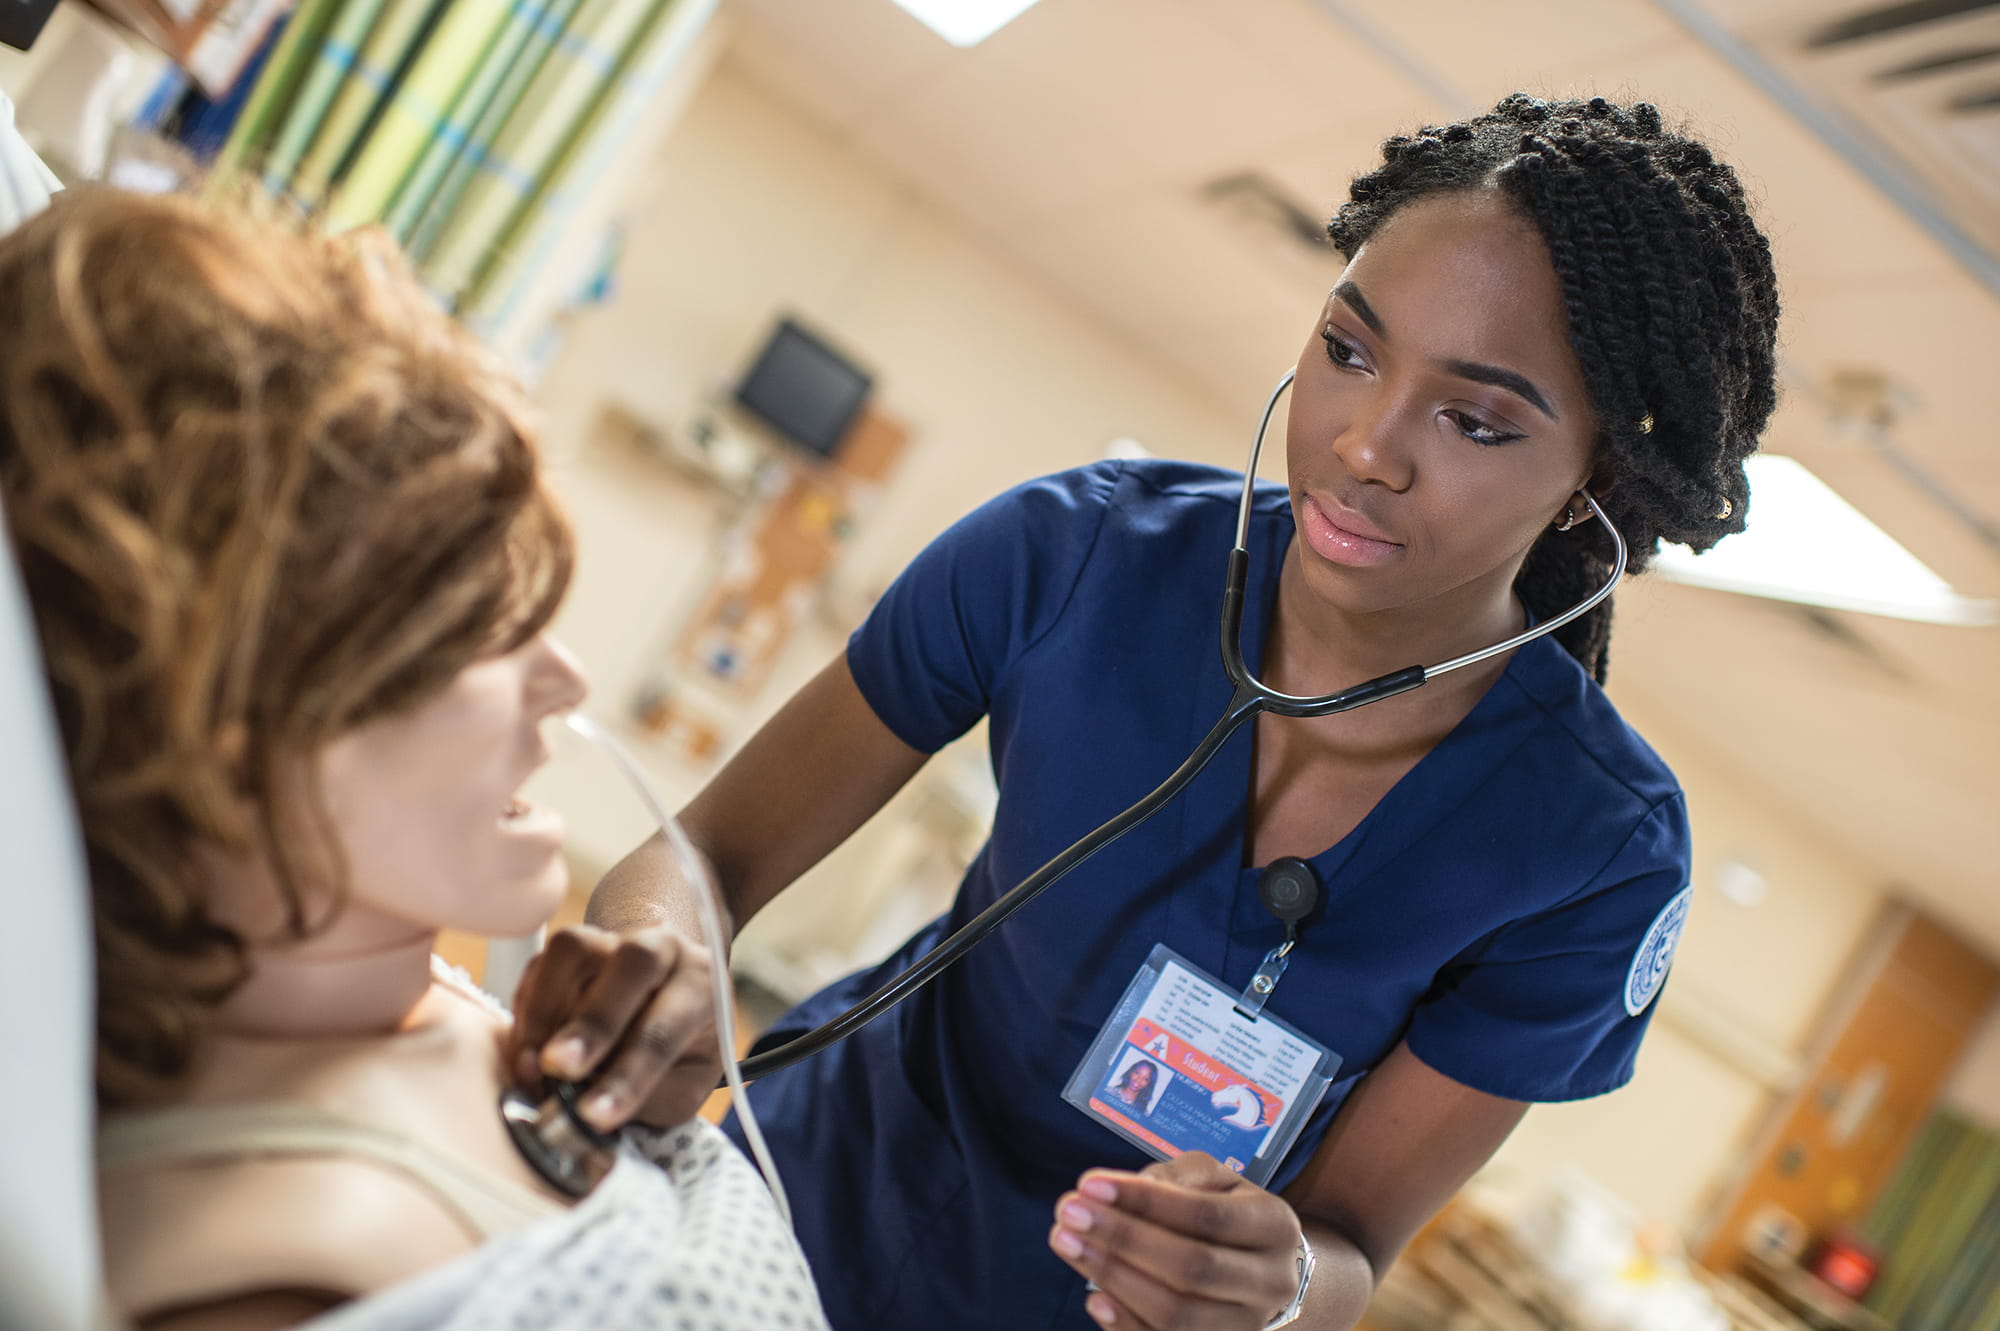 UTA's highly regarded online nursing program celebrates decade of learning  - News Center - The University of Texas at Arlington